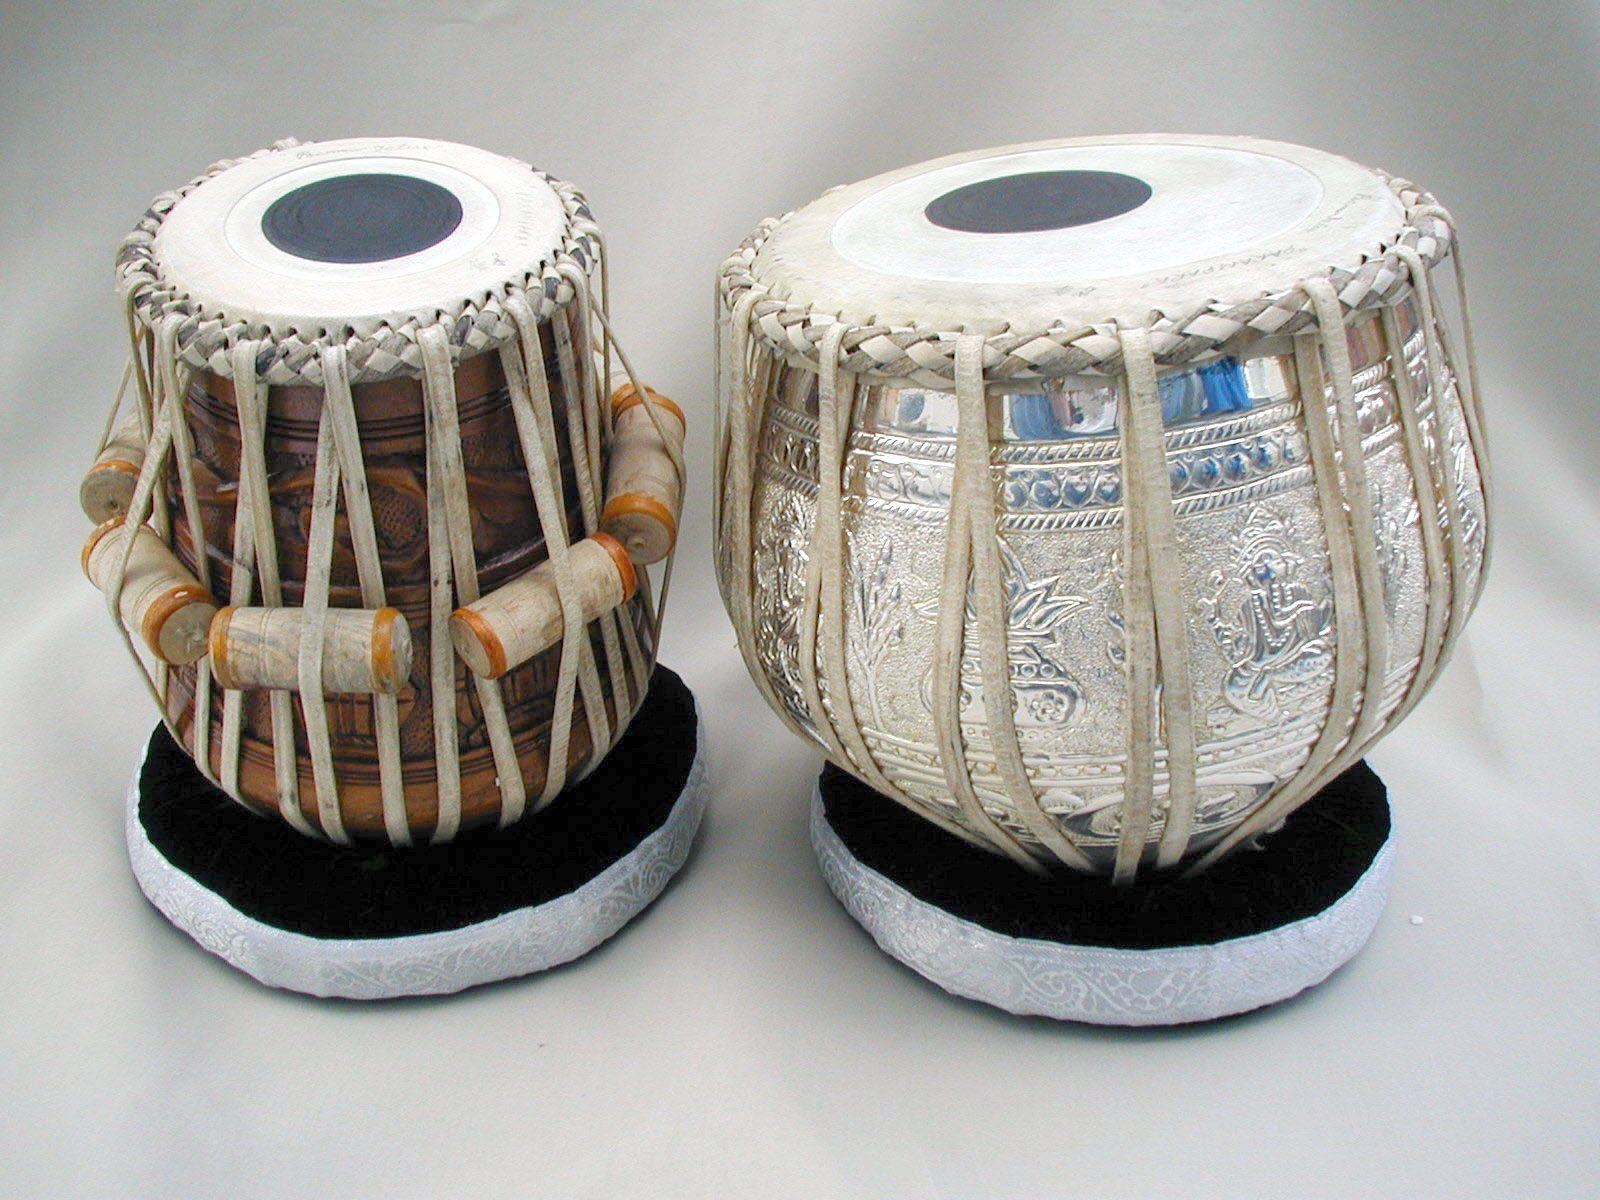 Tabla north Indian percussion instrument. The pair of tabla